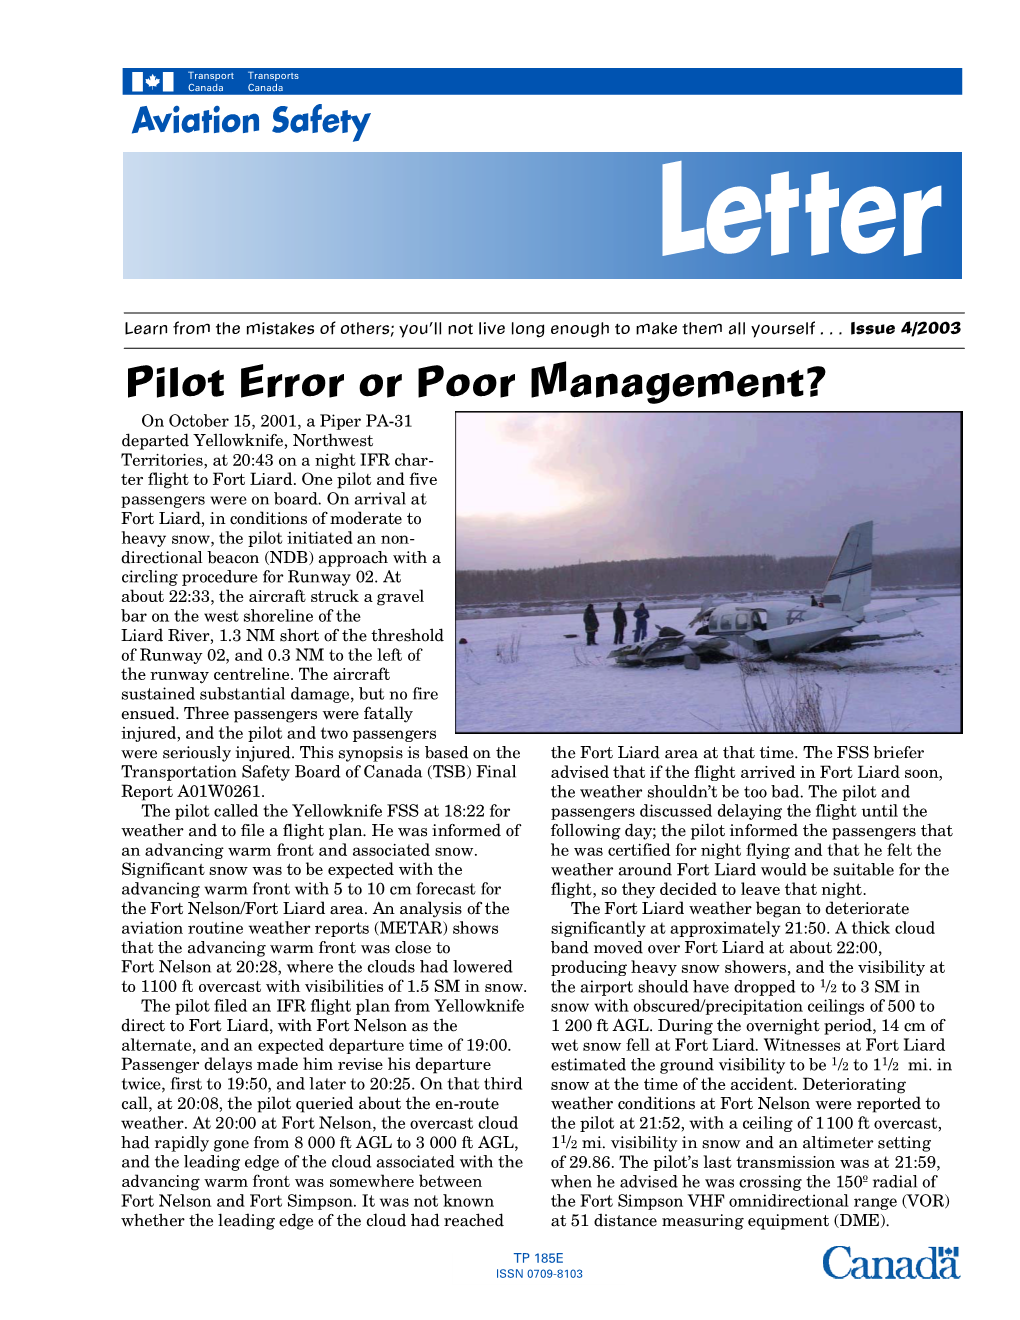 Pilot Error Or Poor Management?